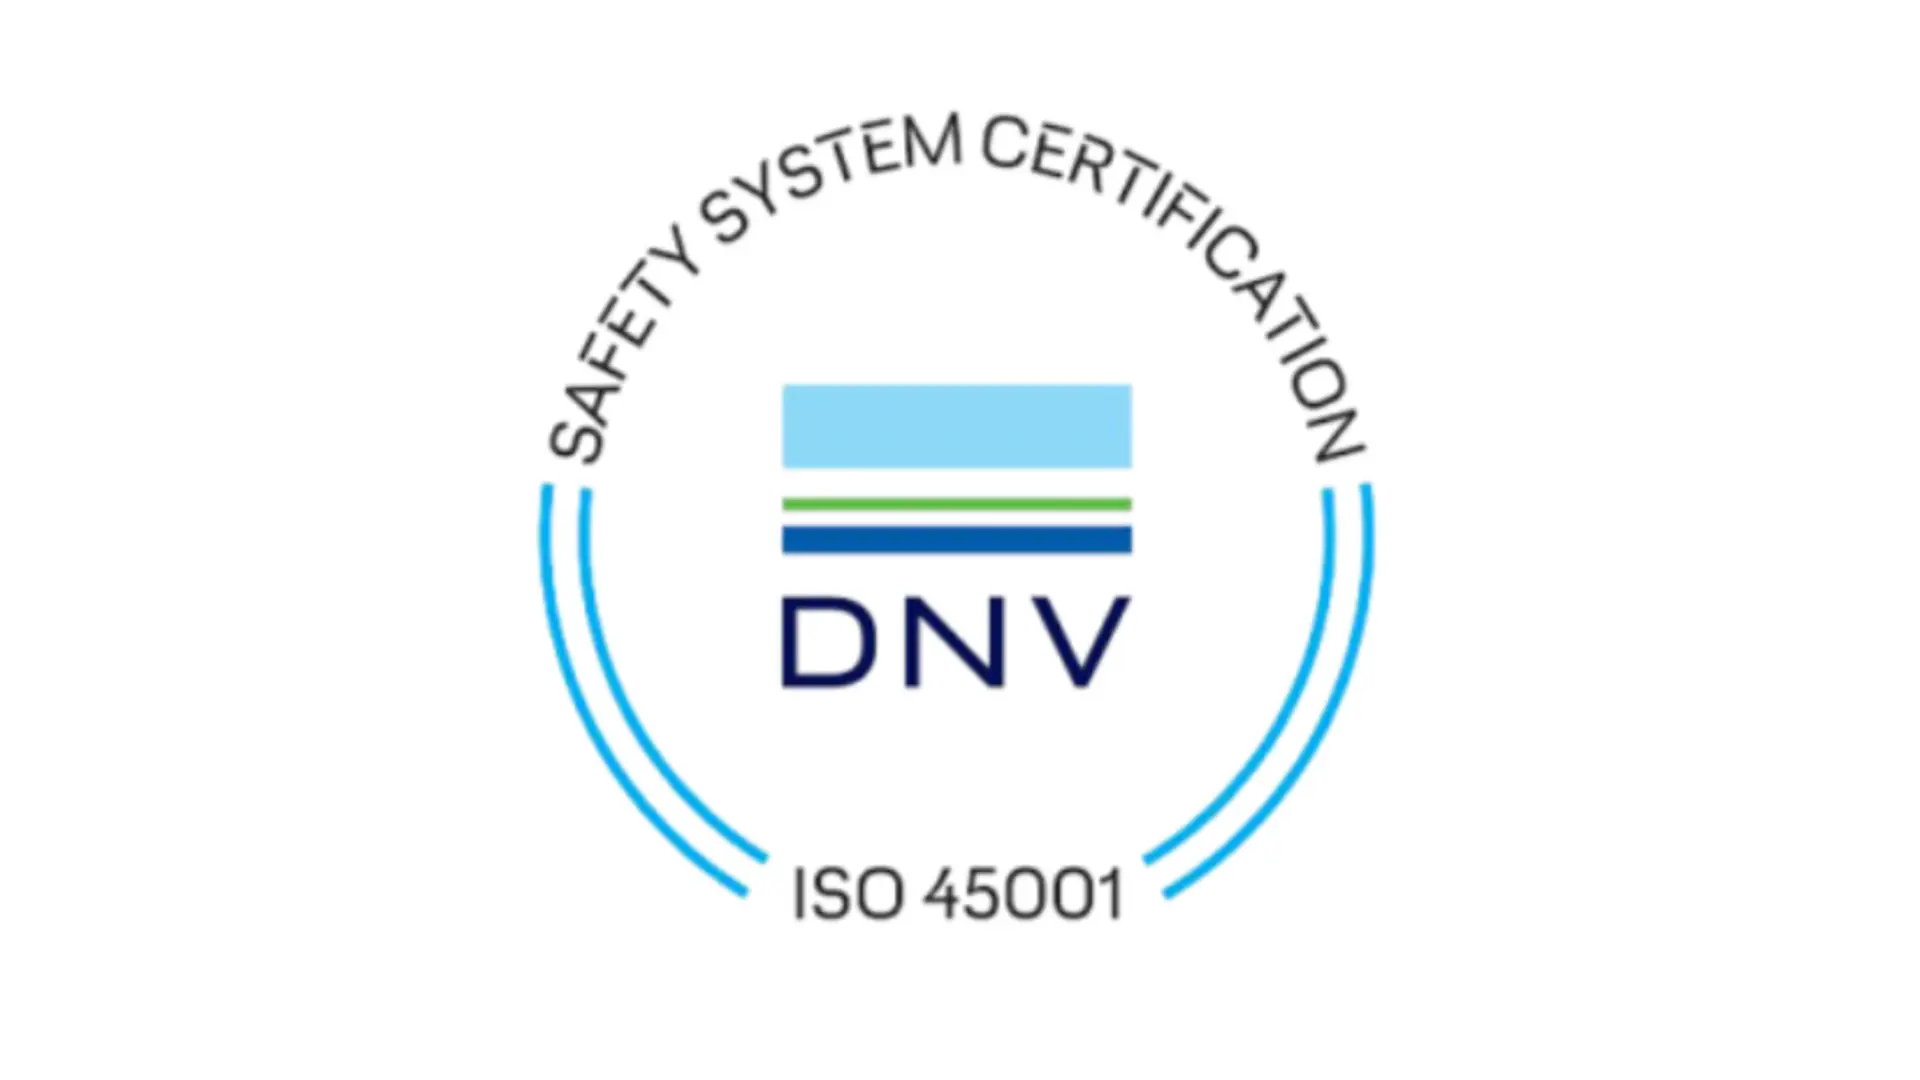 DNV ISO 45001 LOGO THUMBNAIL (1)